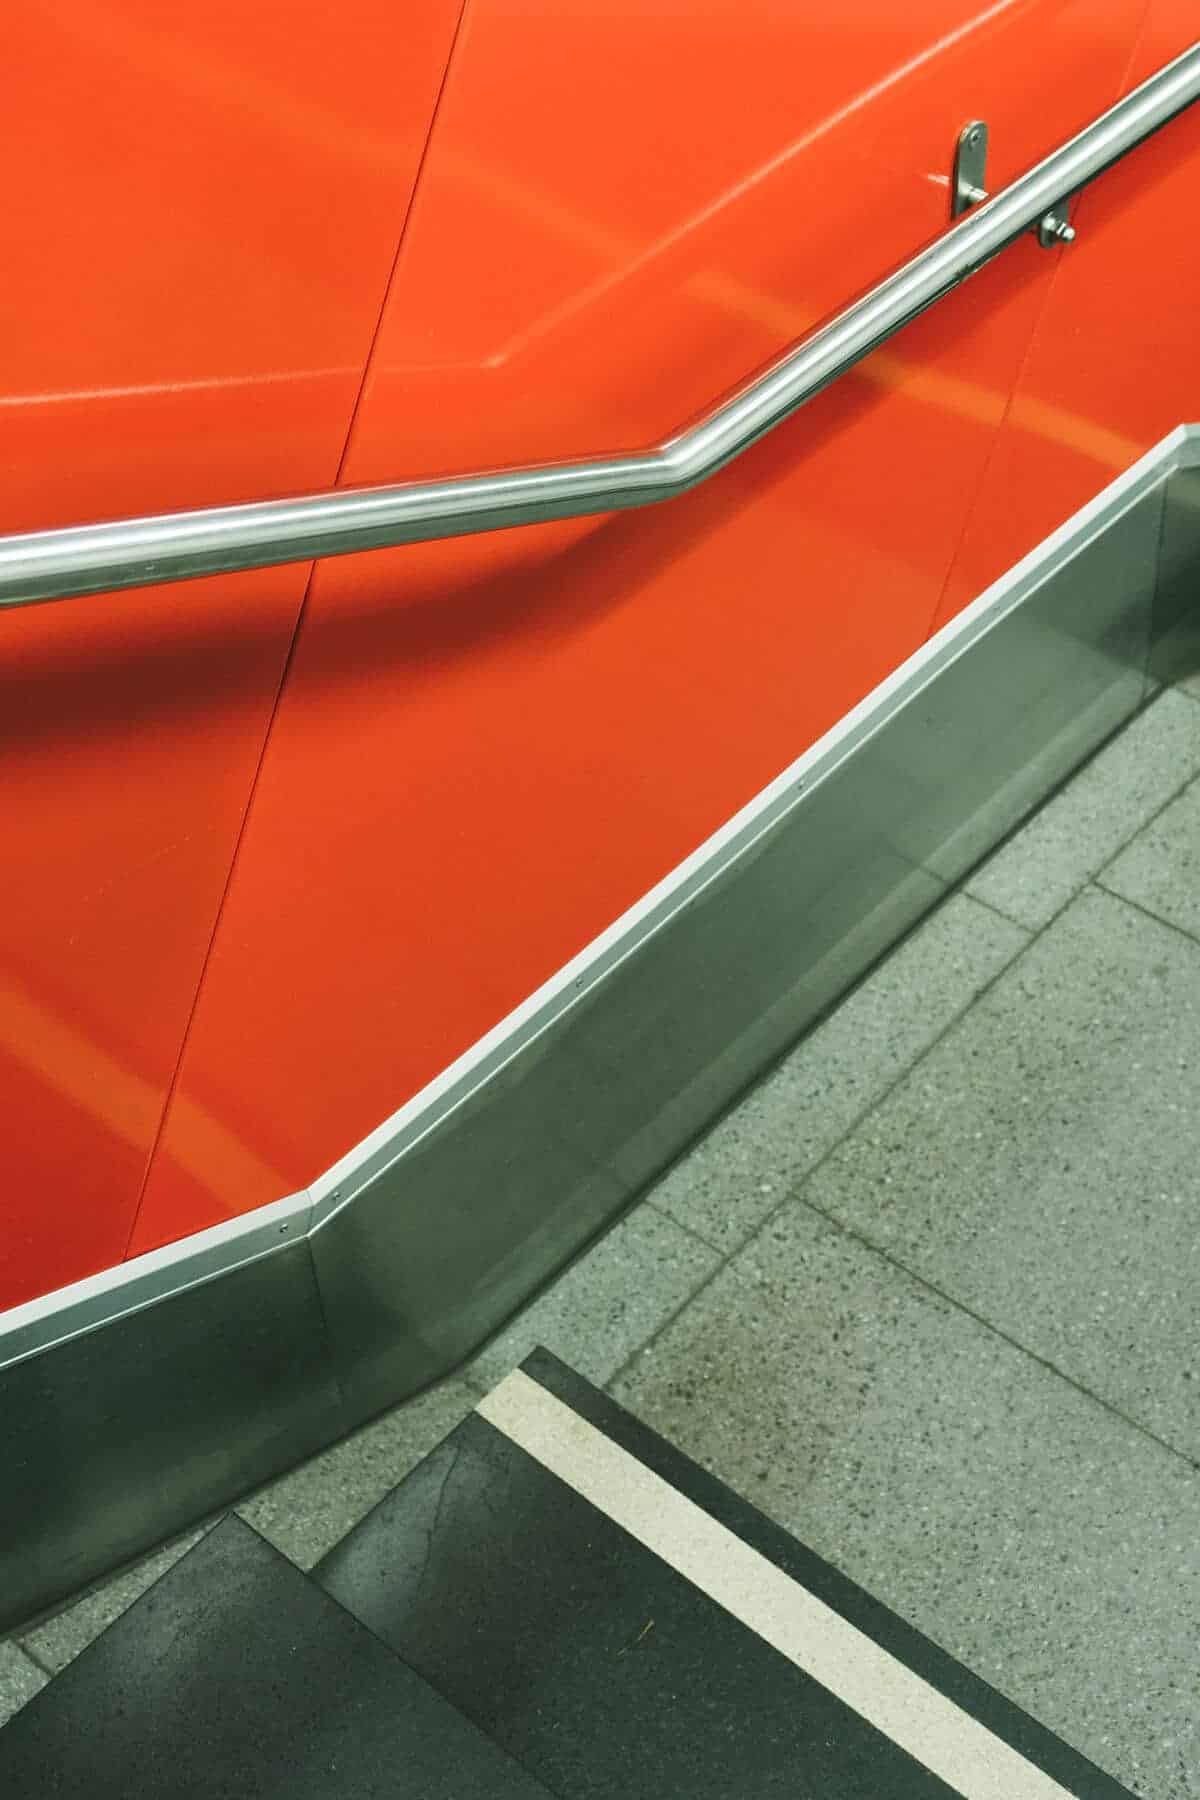 metrostation in Hamburg